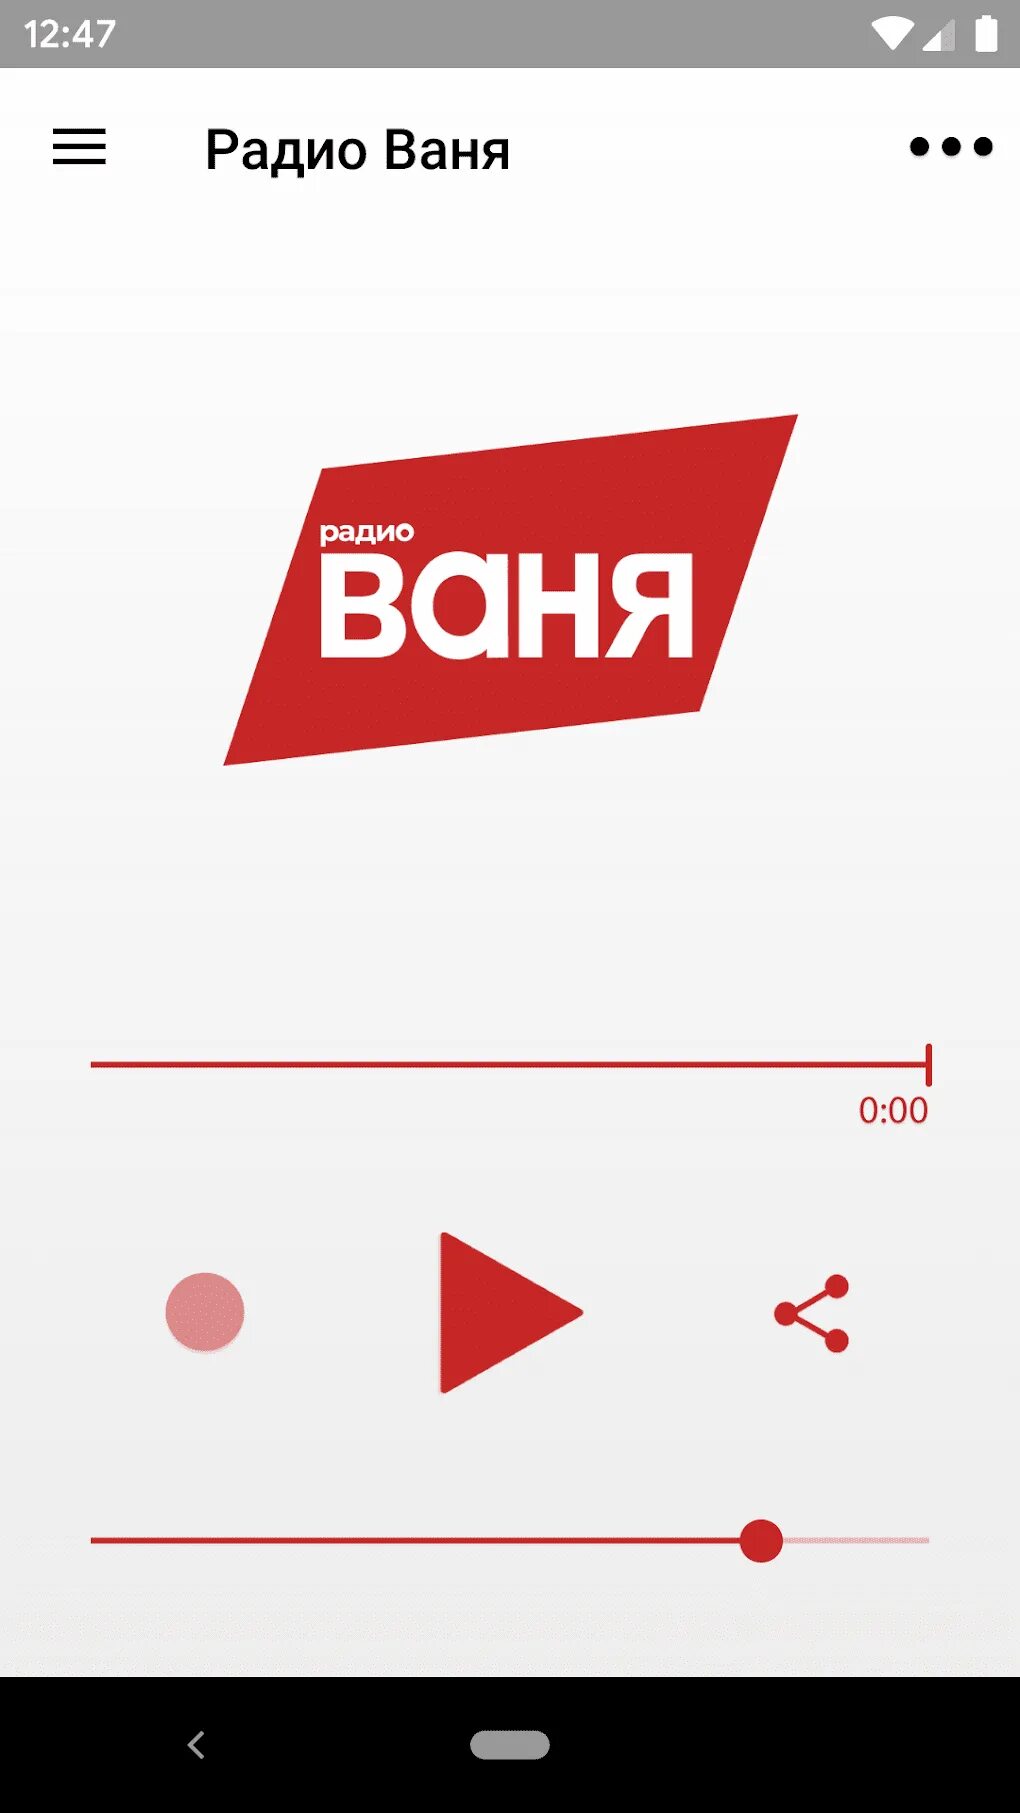 Сайт радио ваня. Радио Ваня. Радио Ваня логотип. Плейлист радио Ваня. Радио Ваня Иваново.